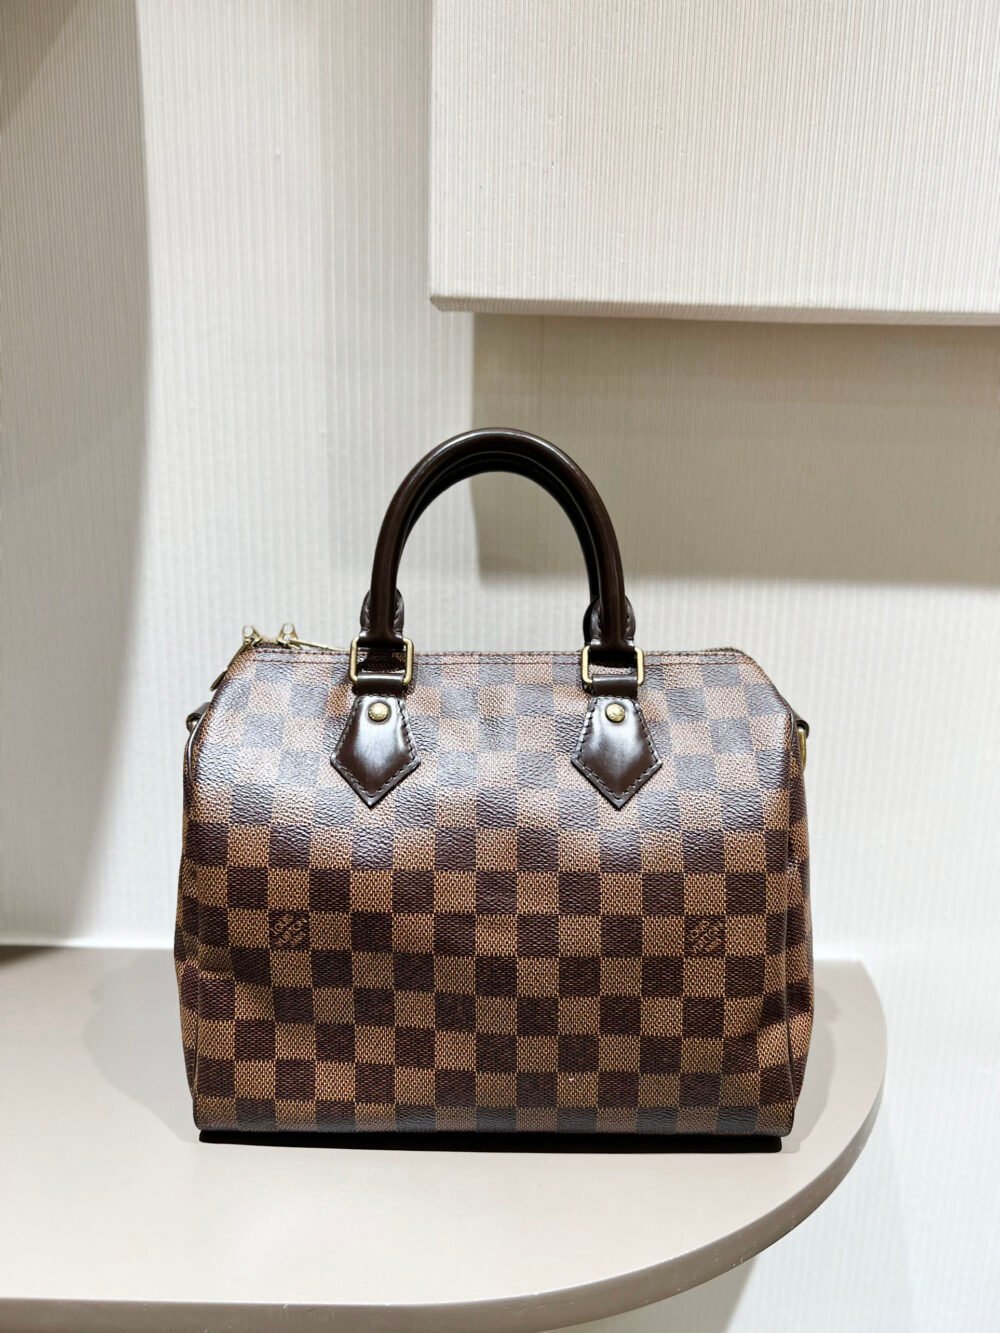 Louis Vuitton Damier Ebene Speedy Handbag